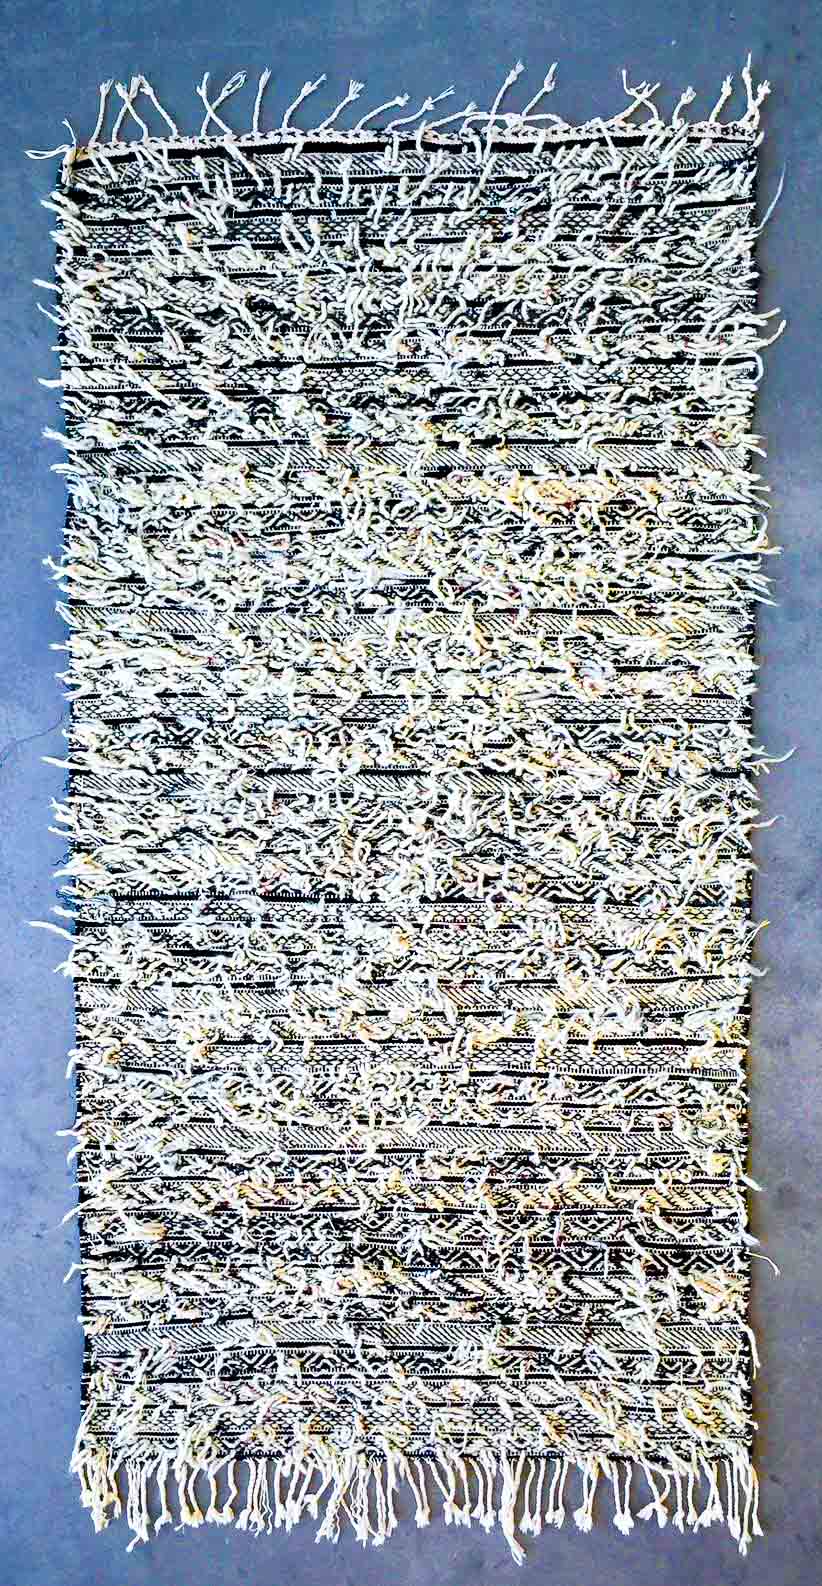 HANDIRA MOROCCAN RUG #10 - Vintage Handmade Carpet/Blanket - On Sale!